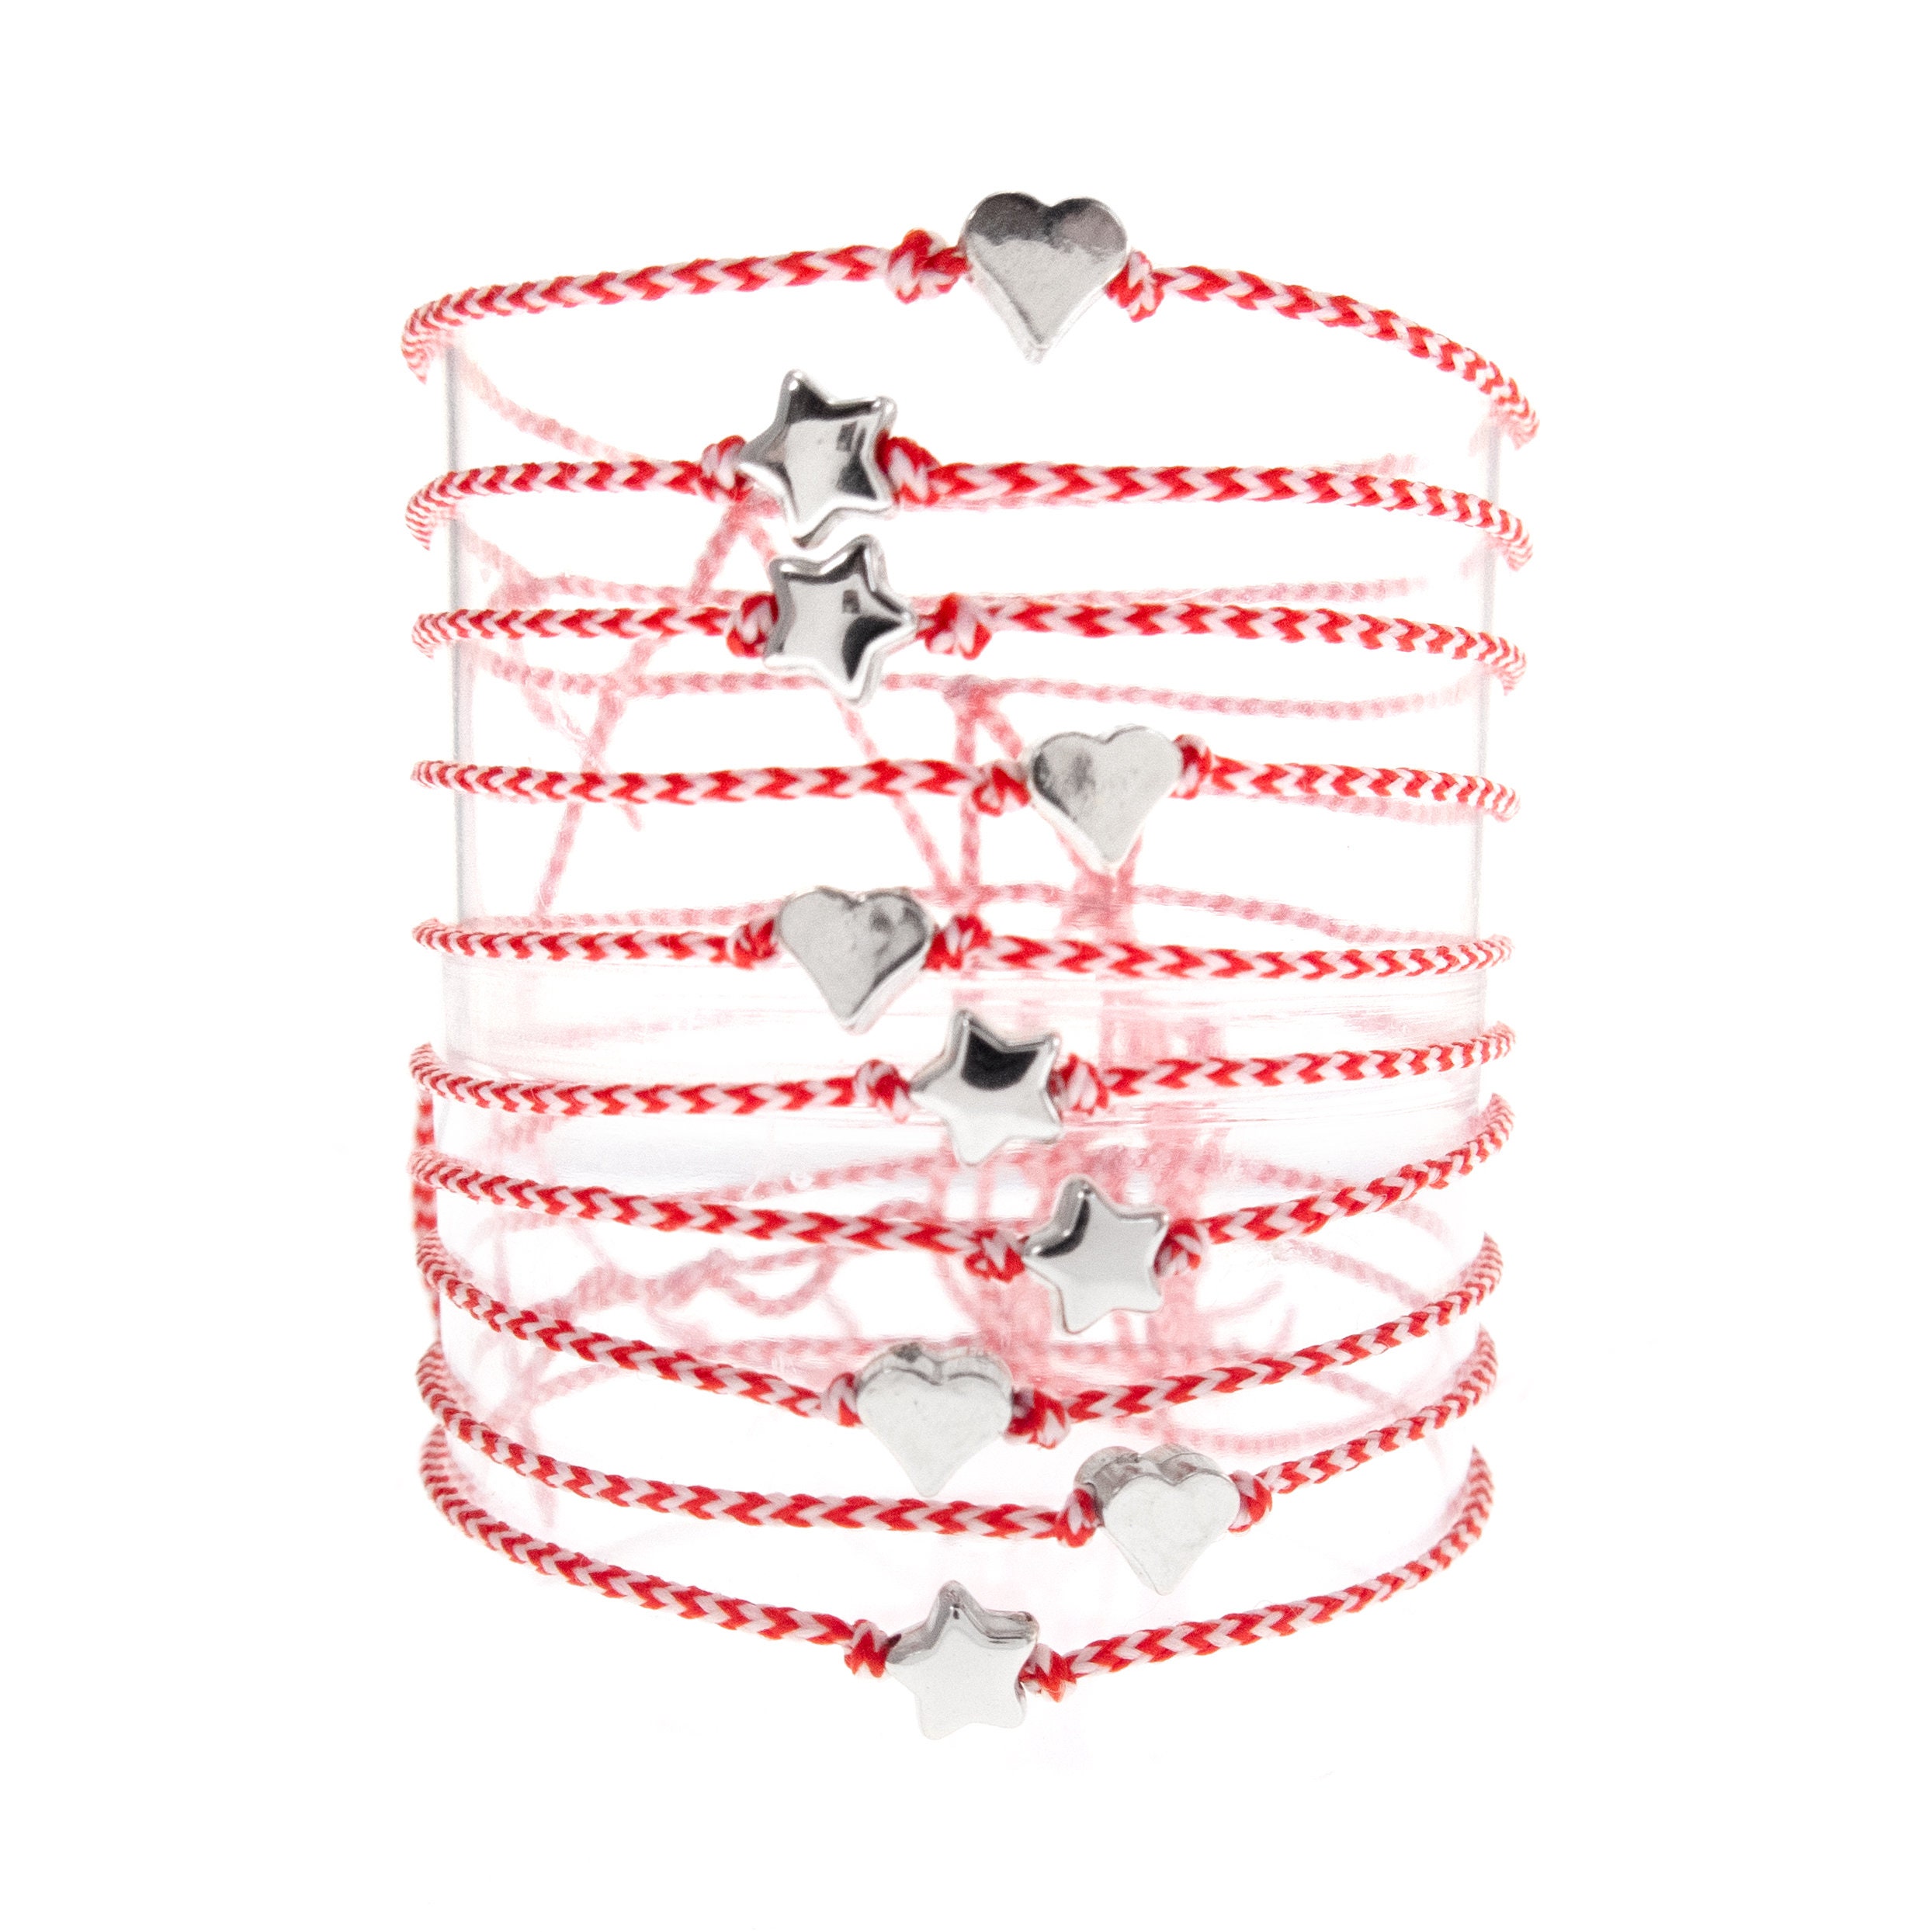 Three-Piece String Bracelet Set - Versatile & Stylish | Luck Strings